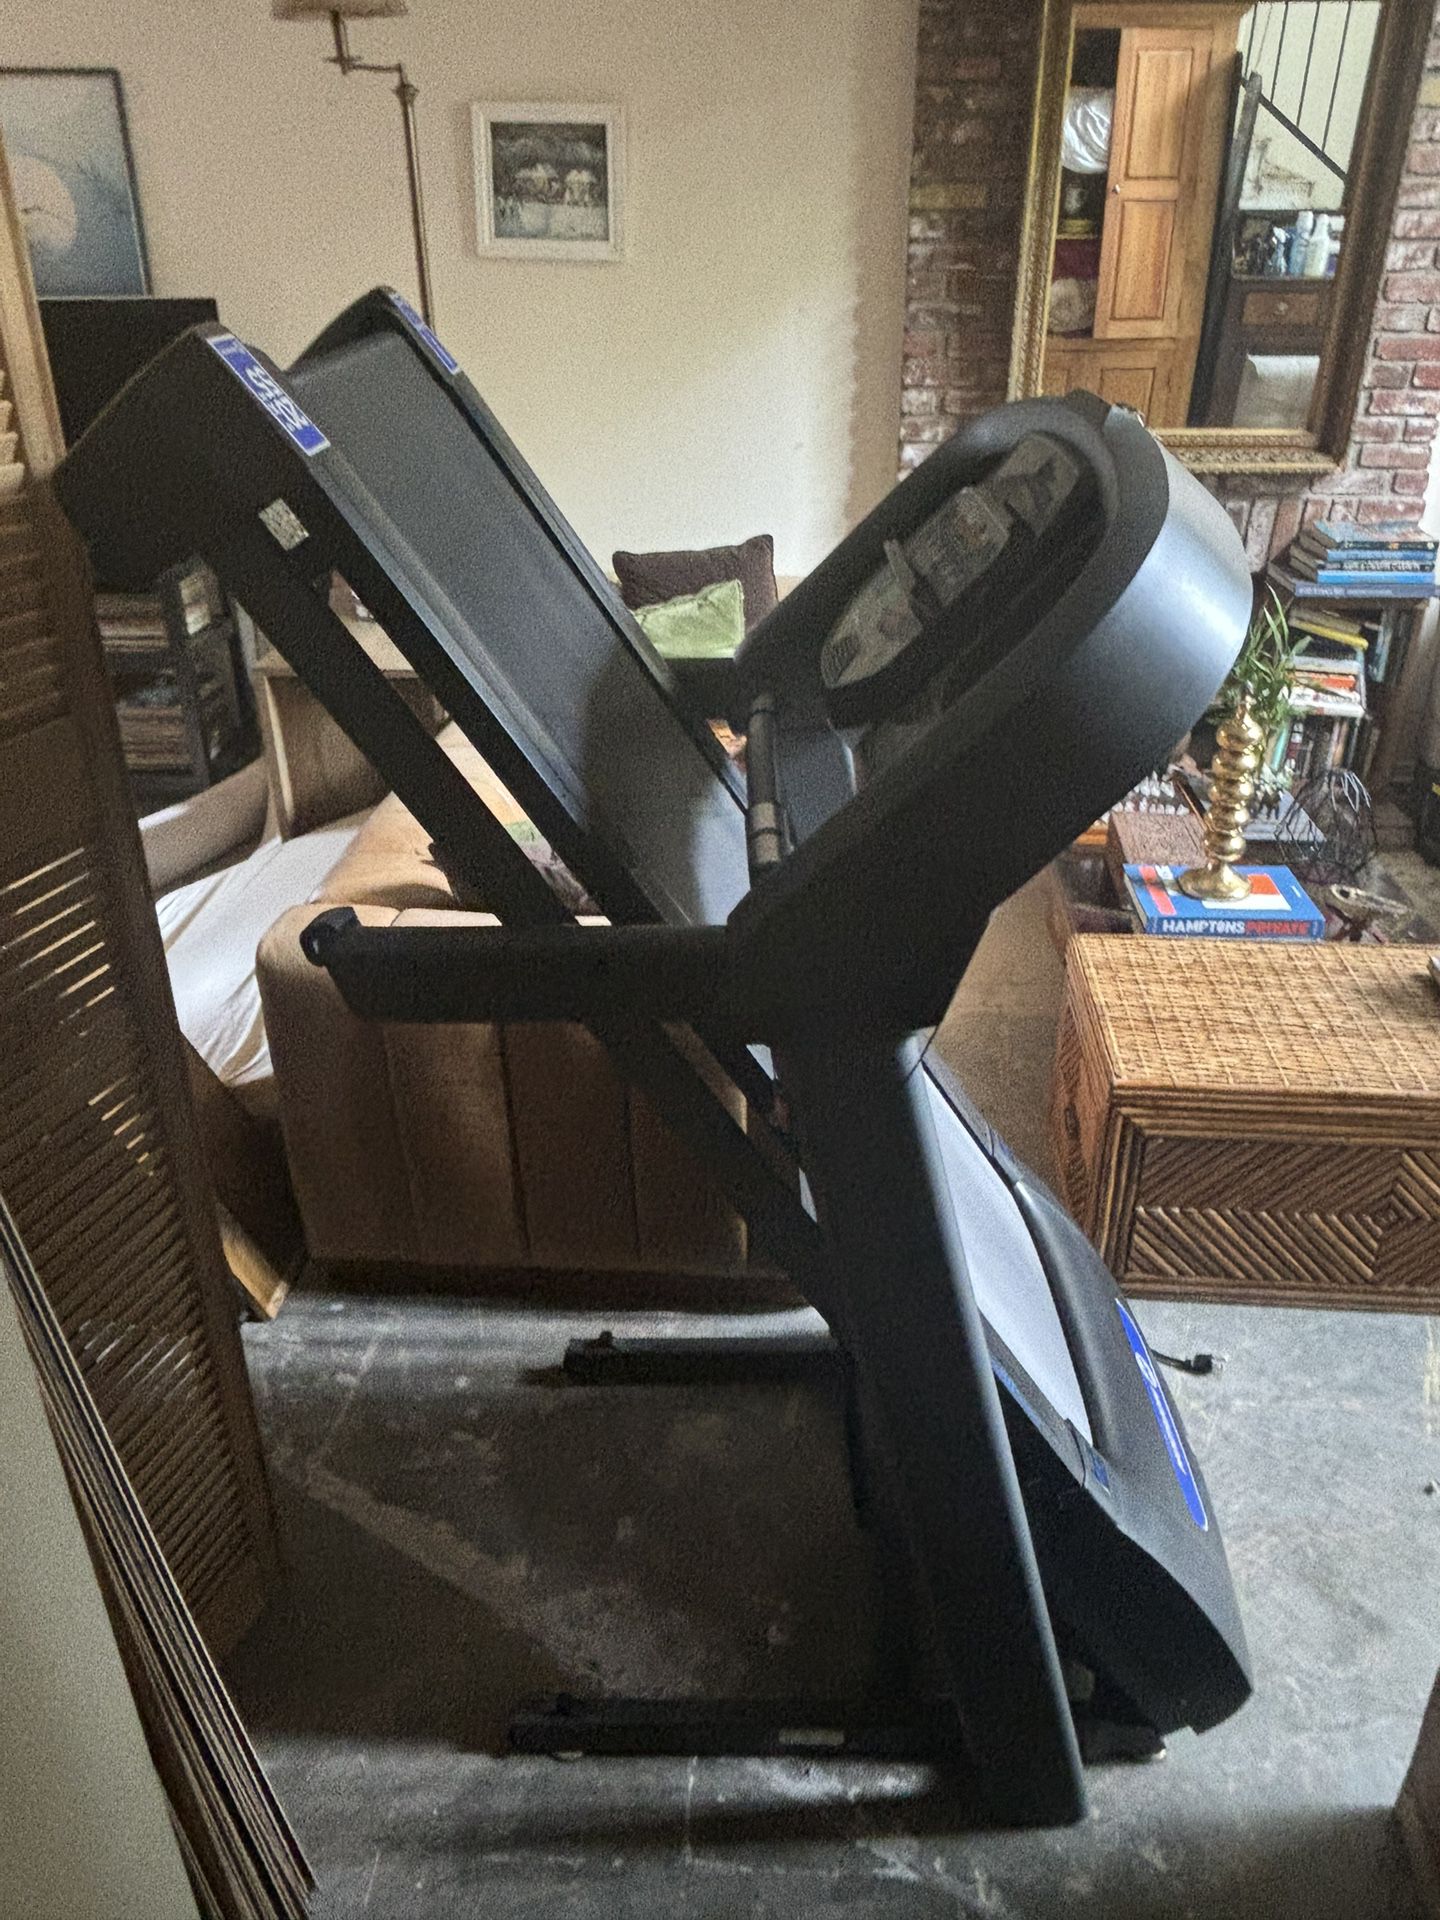 Horizon Fitness T101 Treadmill 